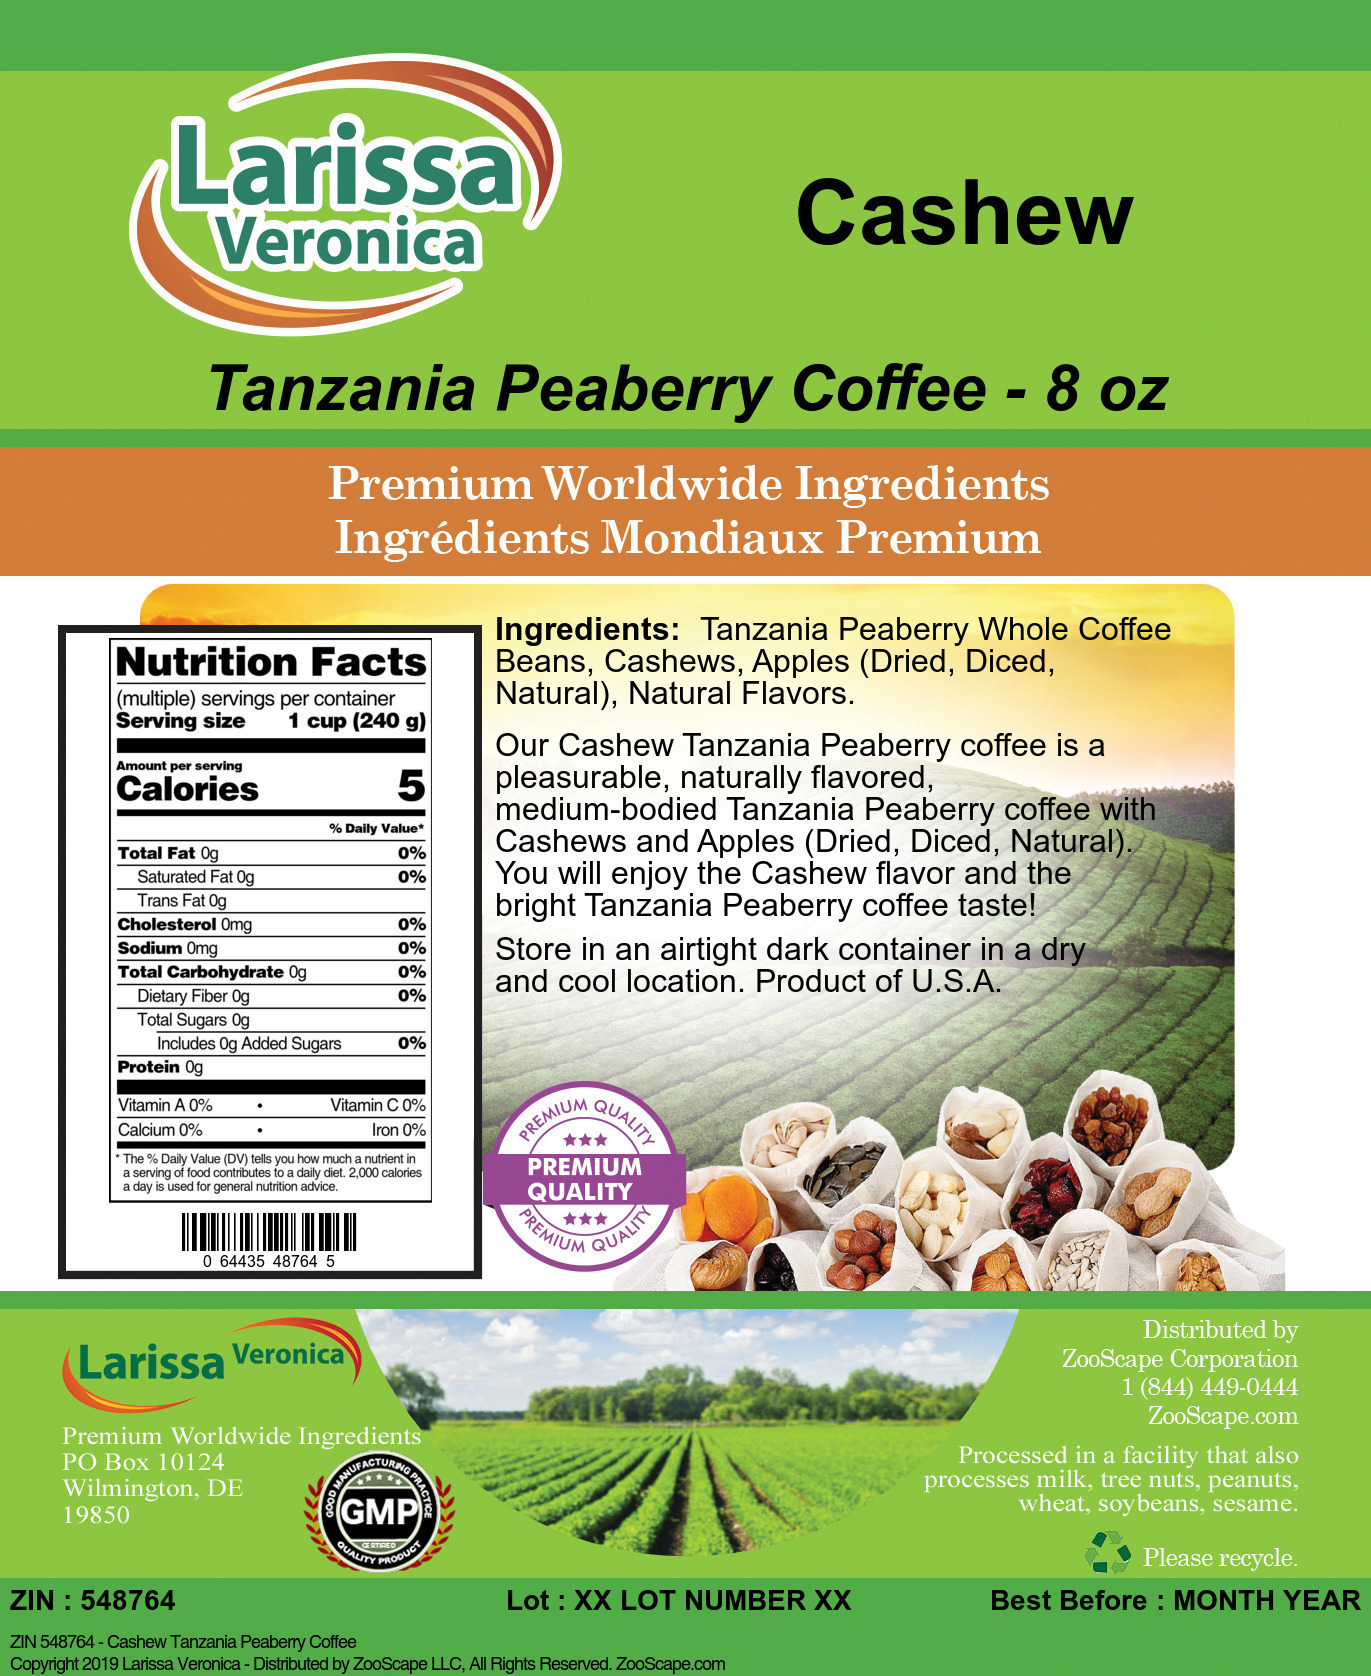 Cashew Tanzania Peaberry Coffee - Label